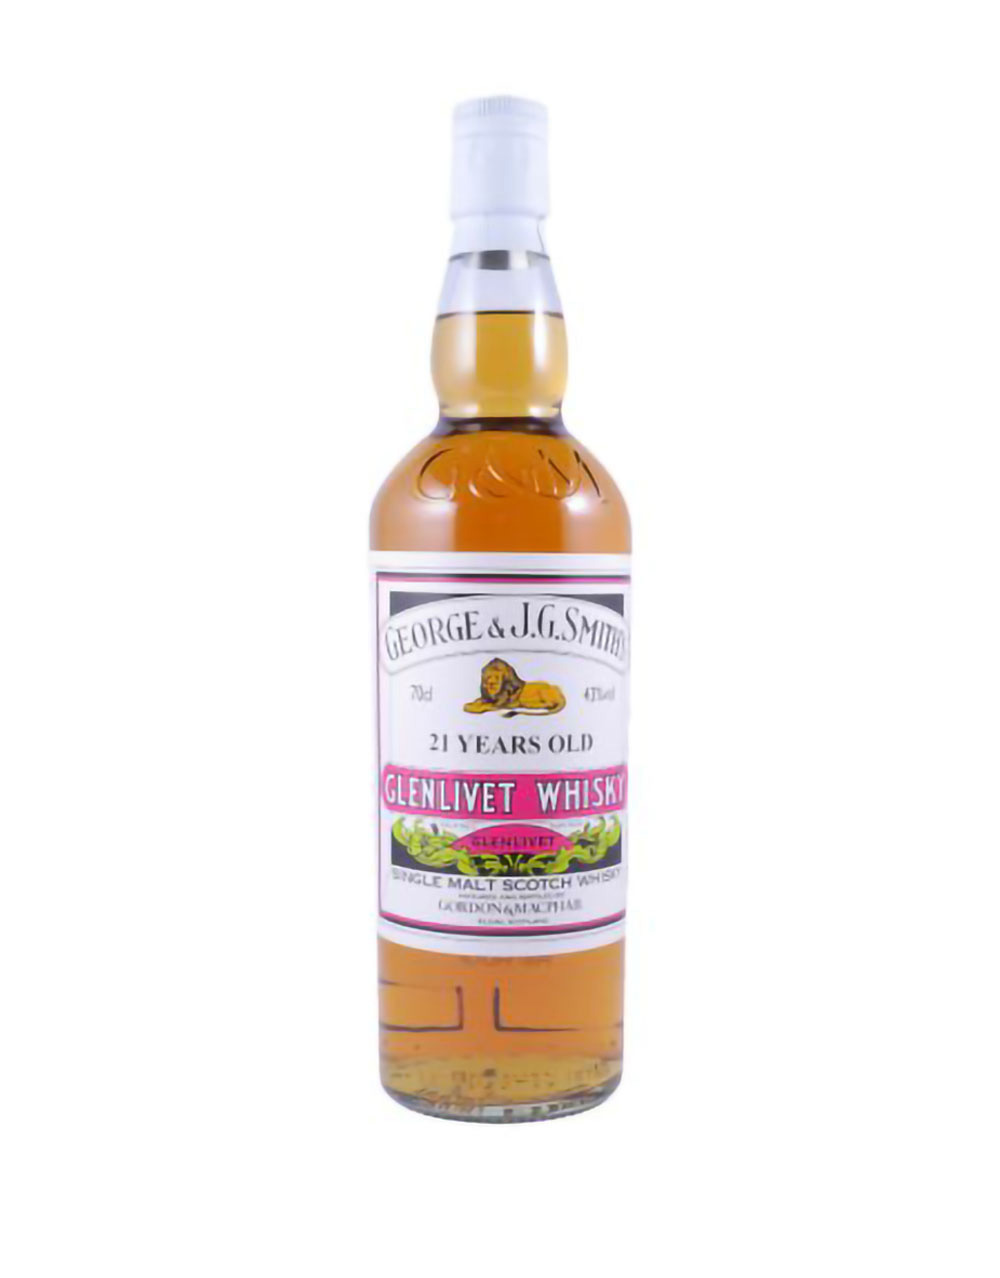 Gordon & MacPhail's The Glenlivet 21 Year Old Single Malt Scotch Whisky